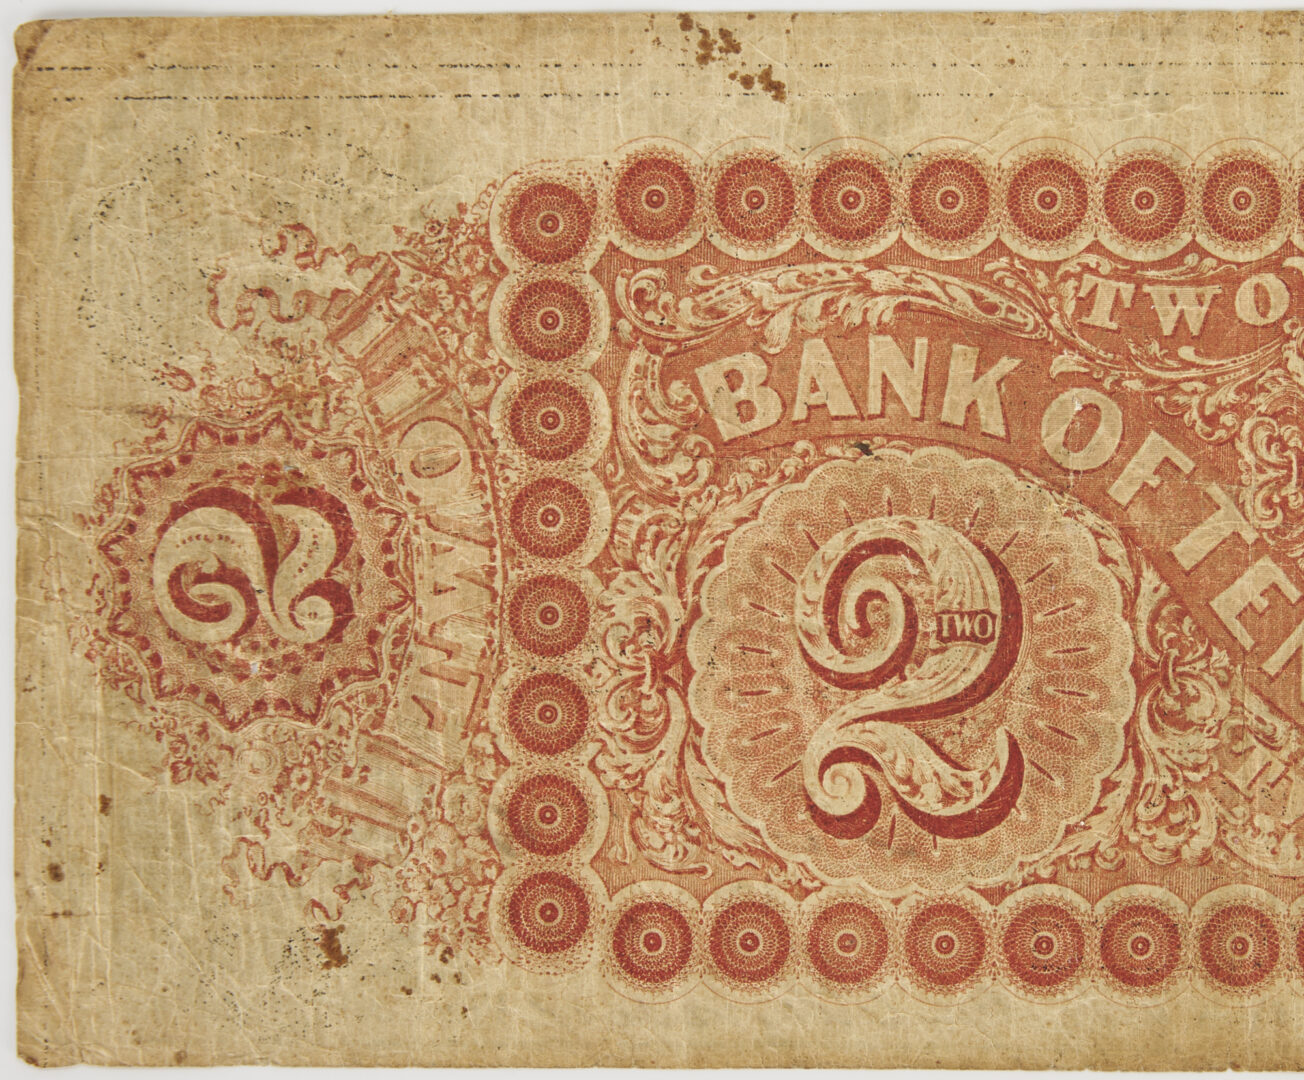 Lot 599: 1861 TN $2 Banknote plus 1855 $10 Memphis Mechanics Bank